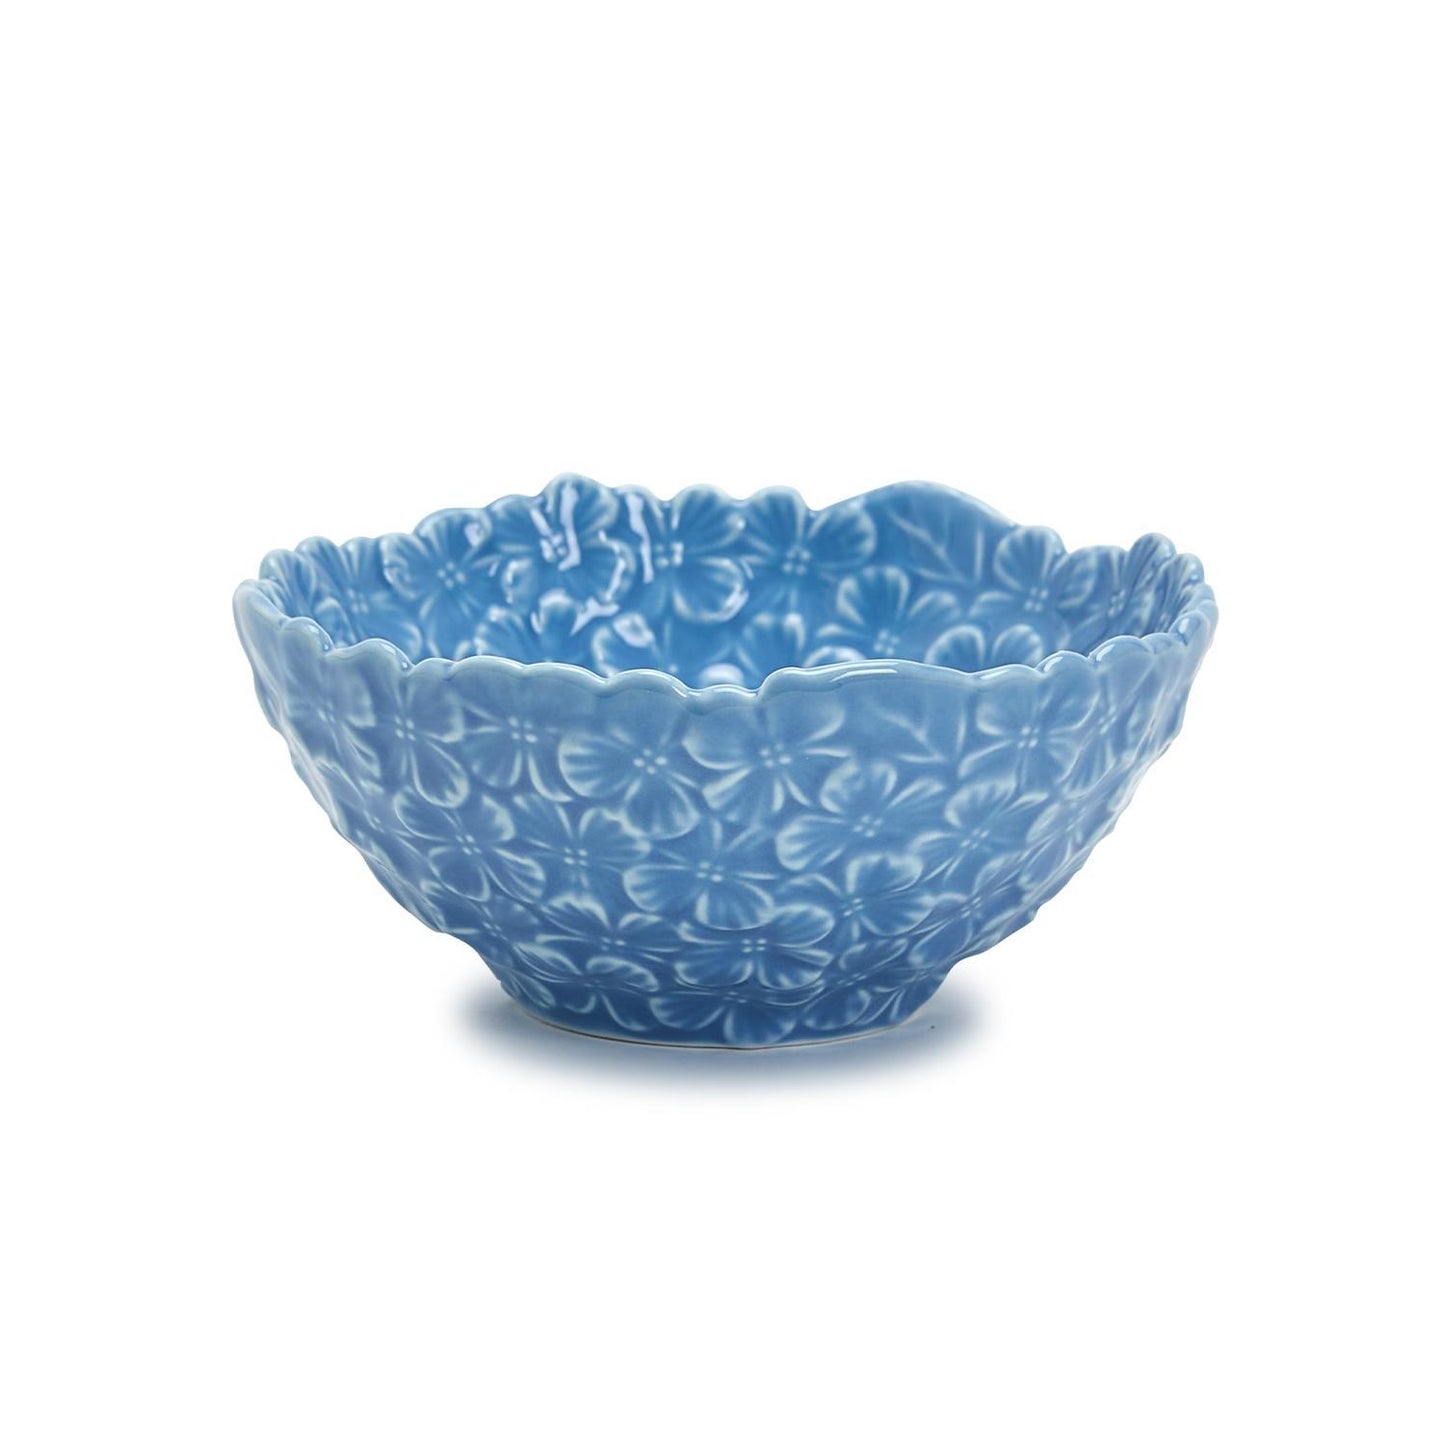 Two's Company Blue Hydrangea Set Of 3 Tidbit Bowls